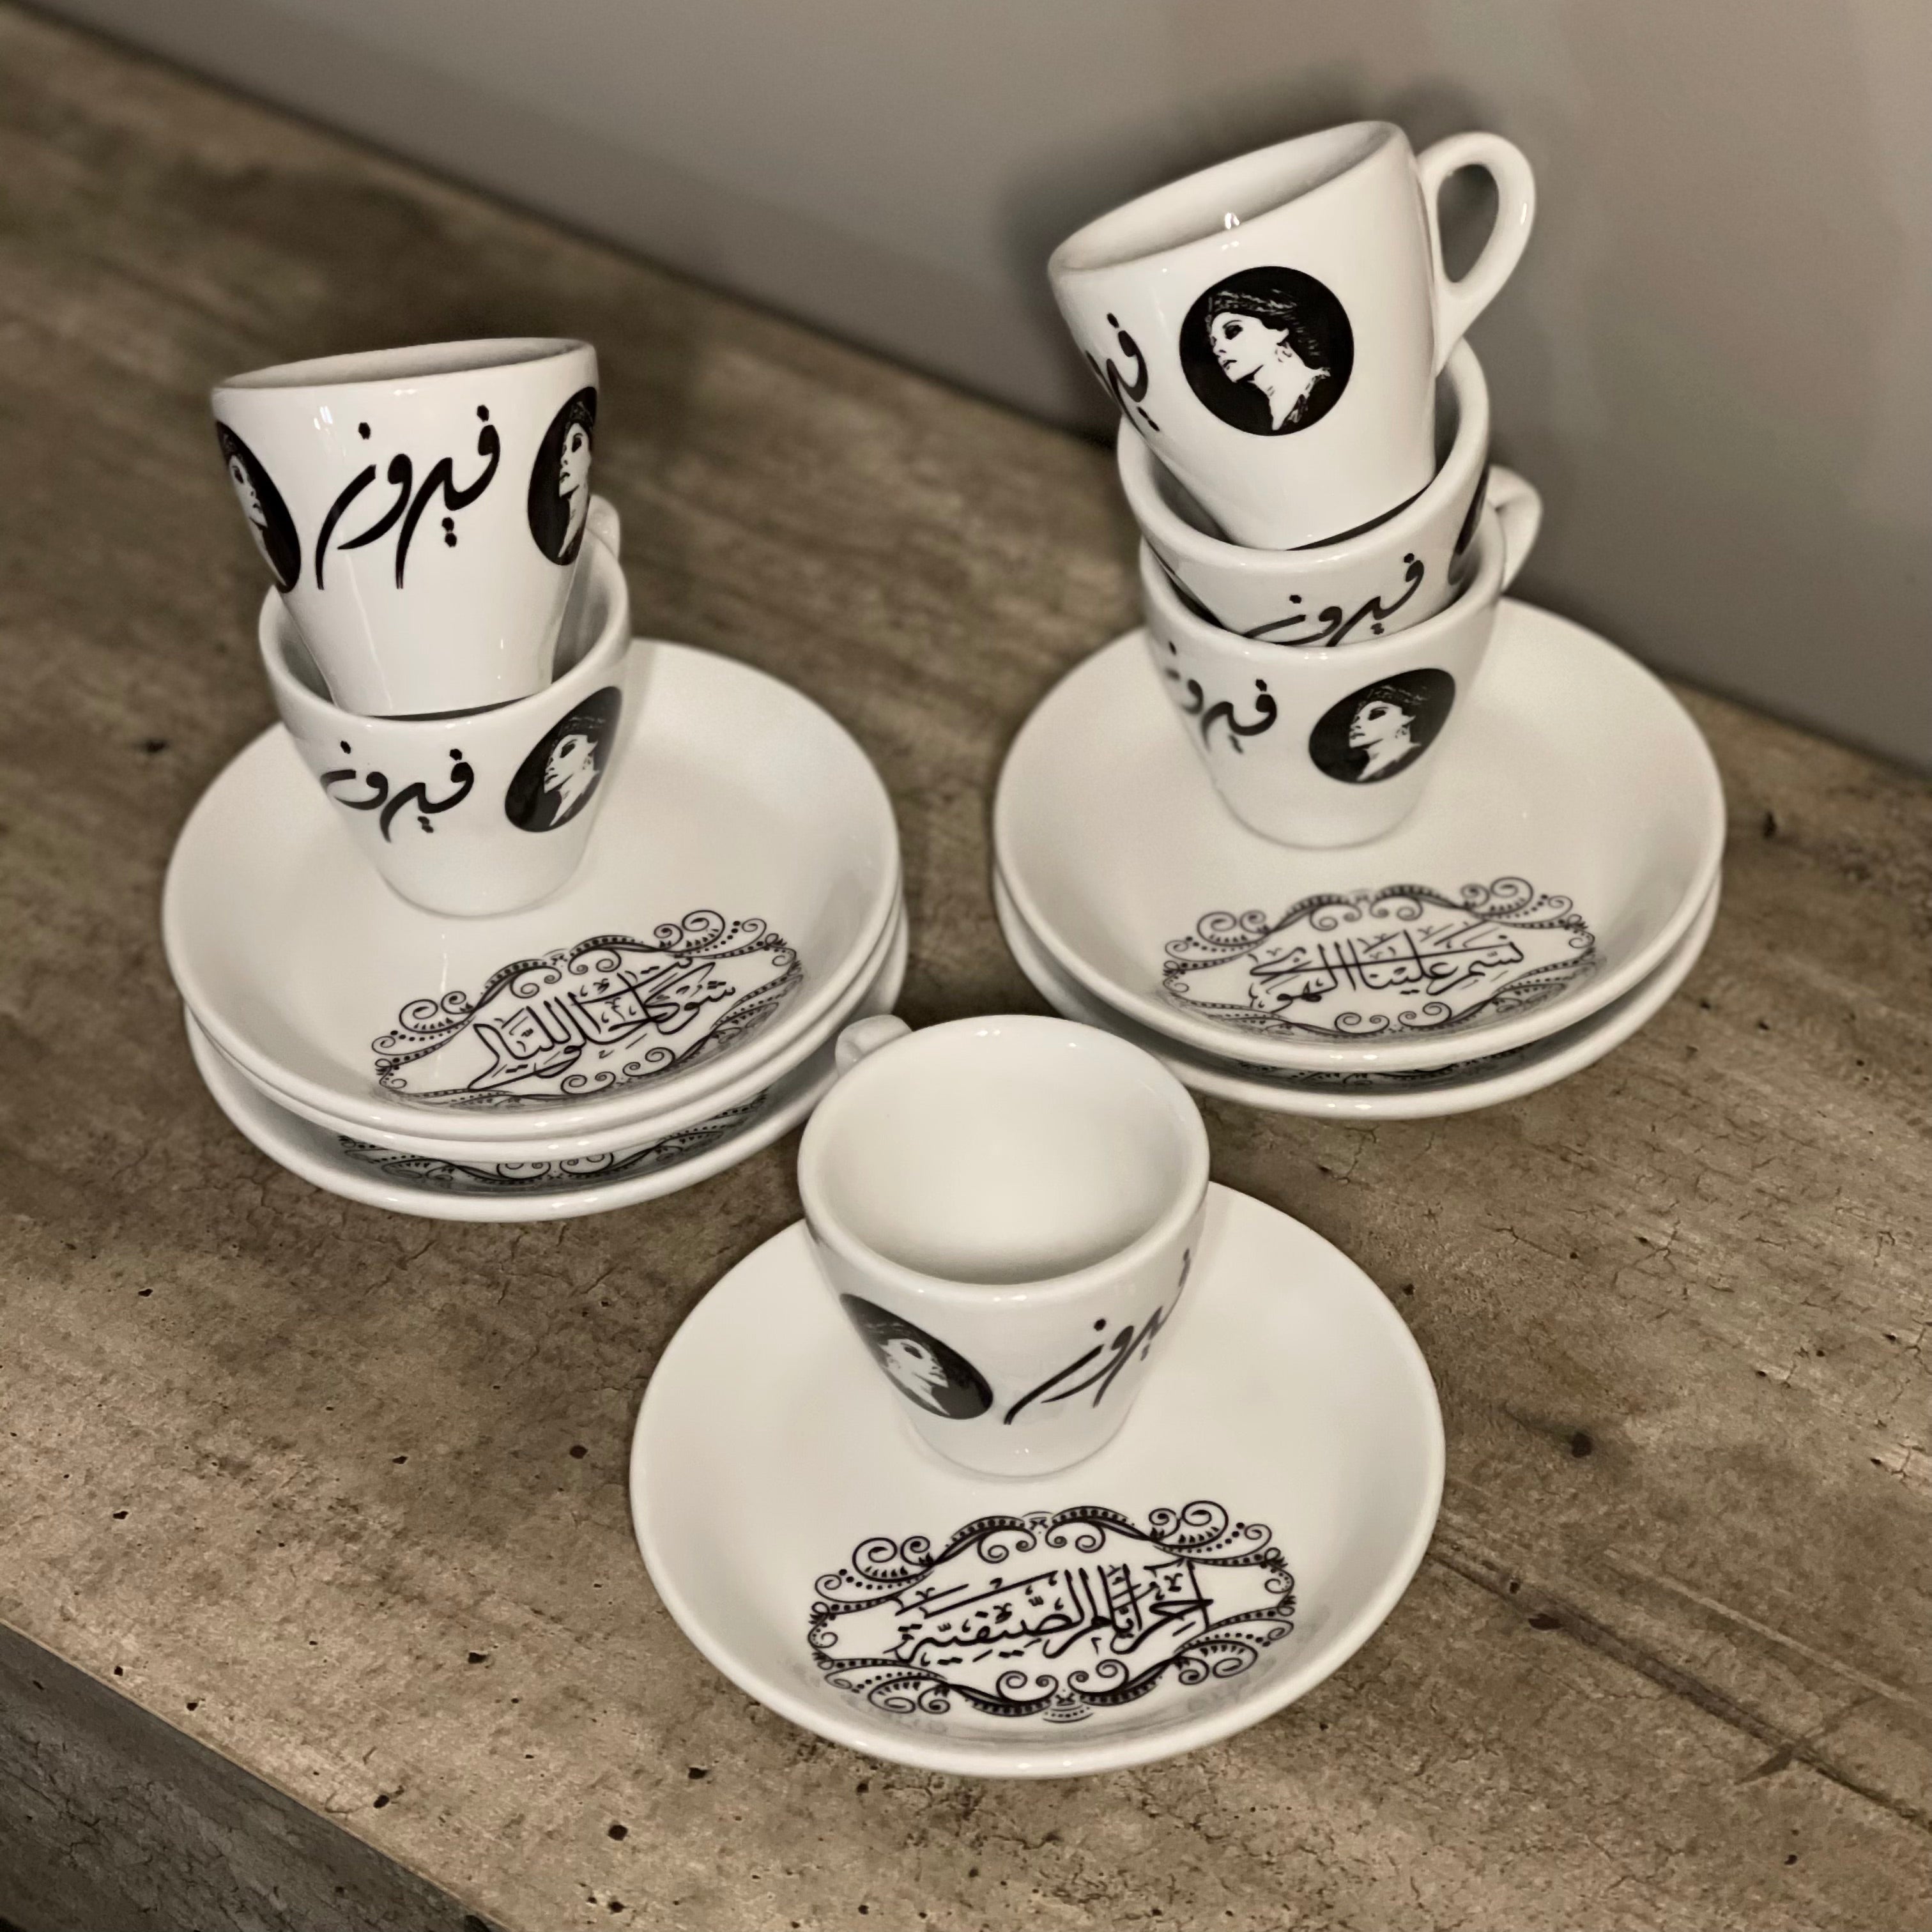 Porcelain Lavazza Espresso Cups - Black Collection